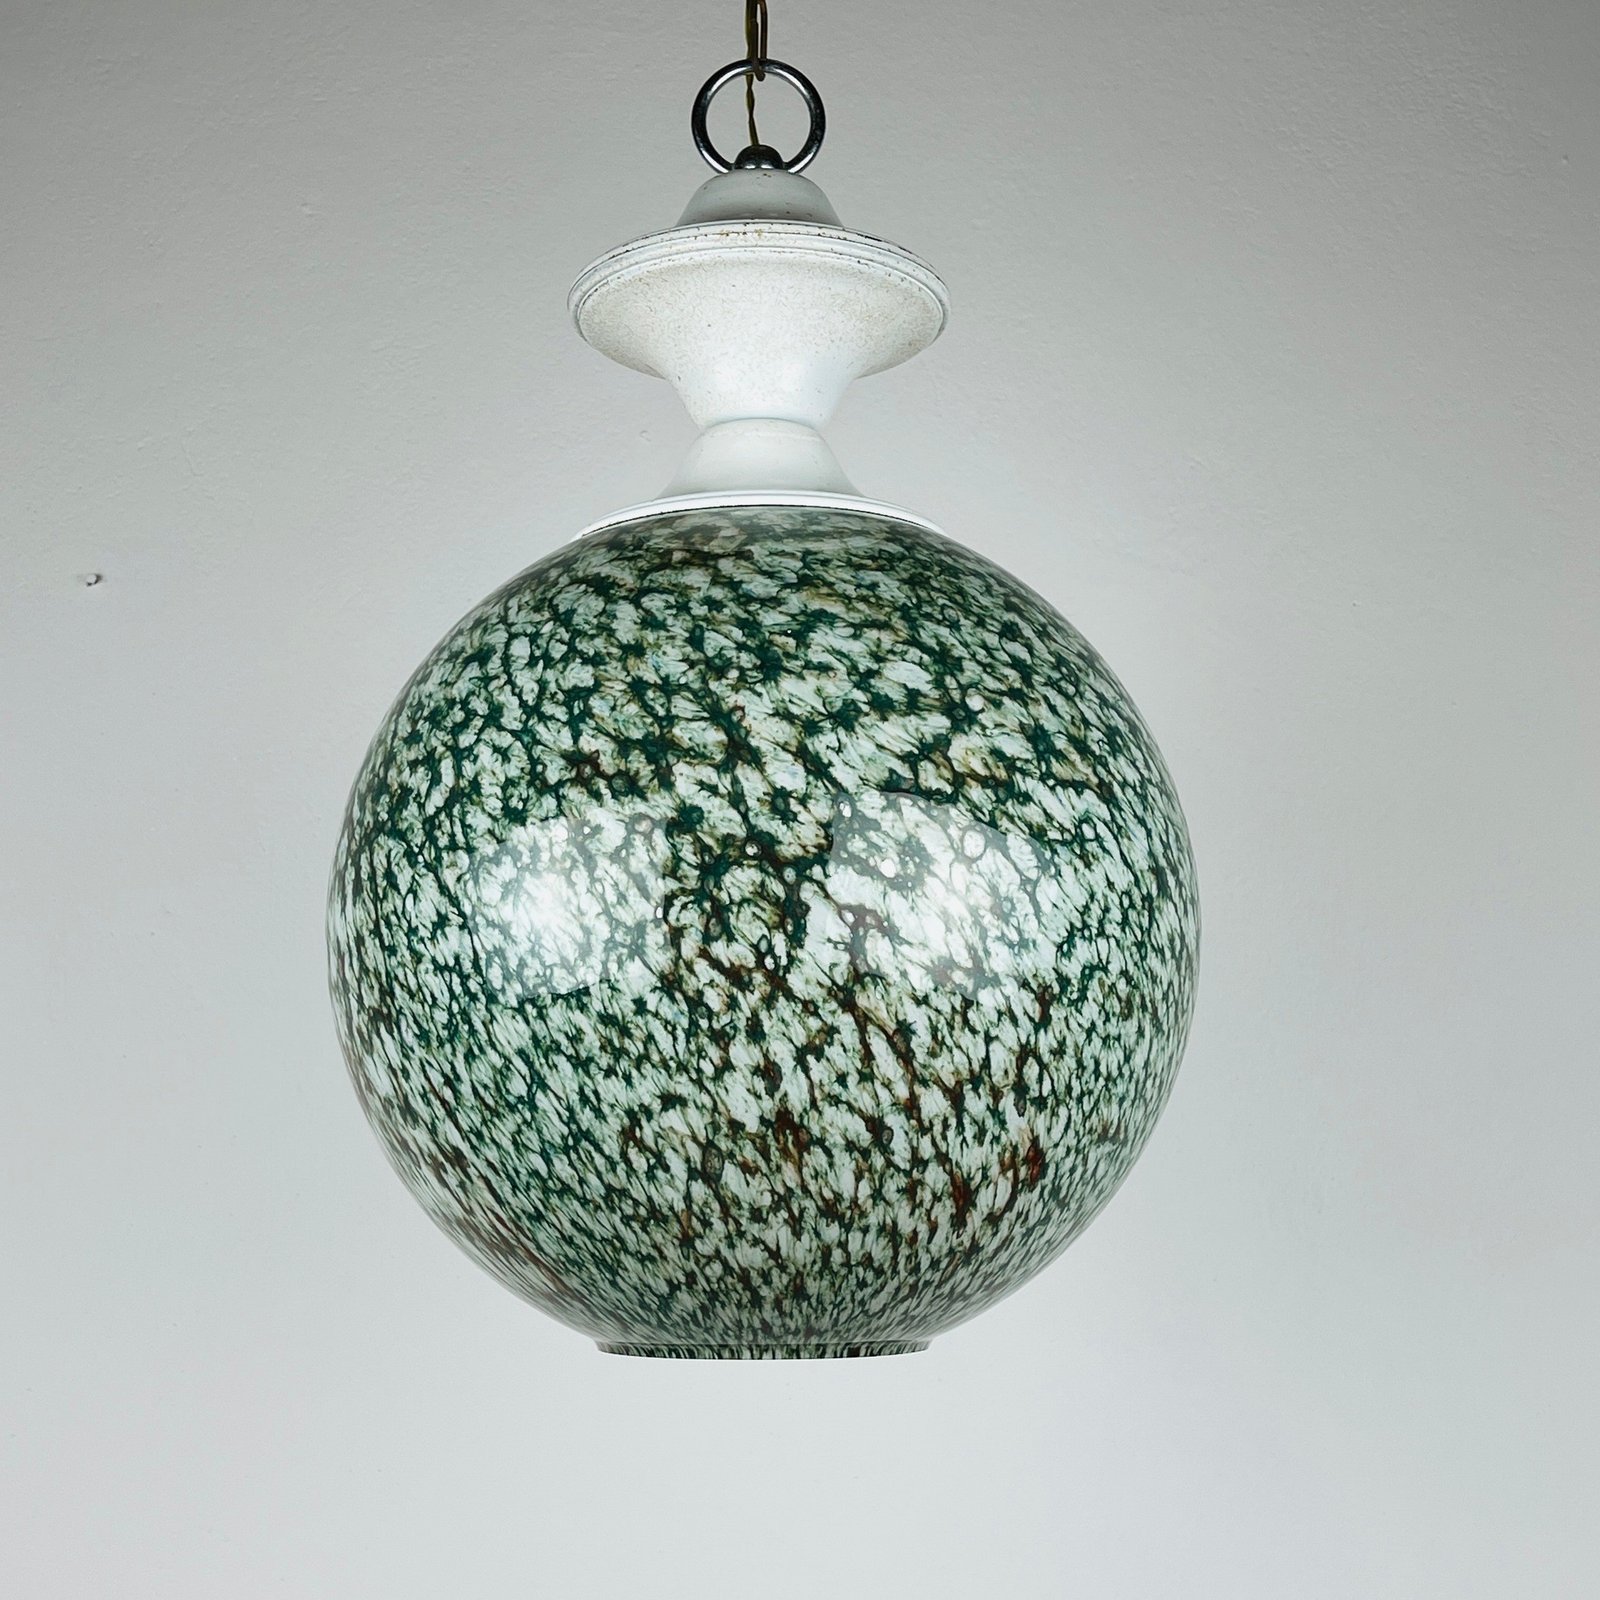 Green murano pendant lamp Italy 1970s Italian mid-century modern lighting